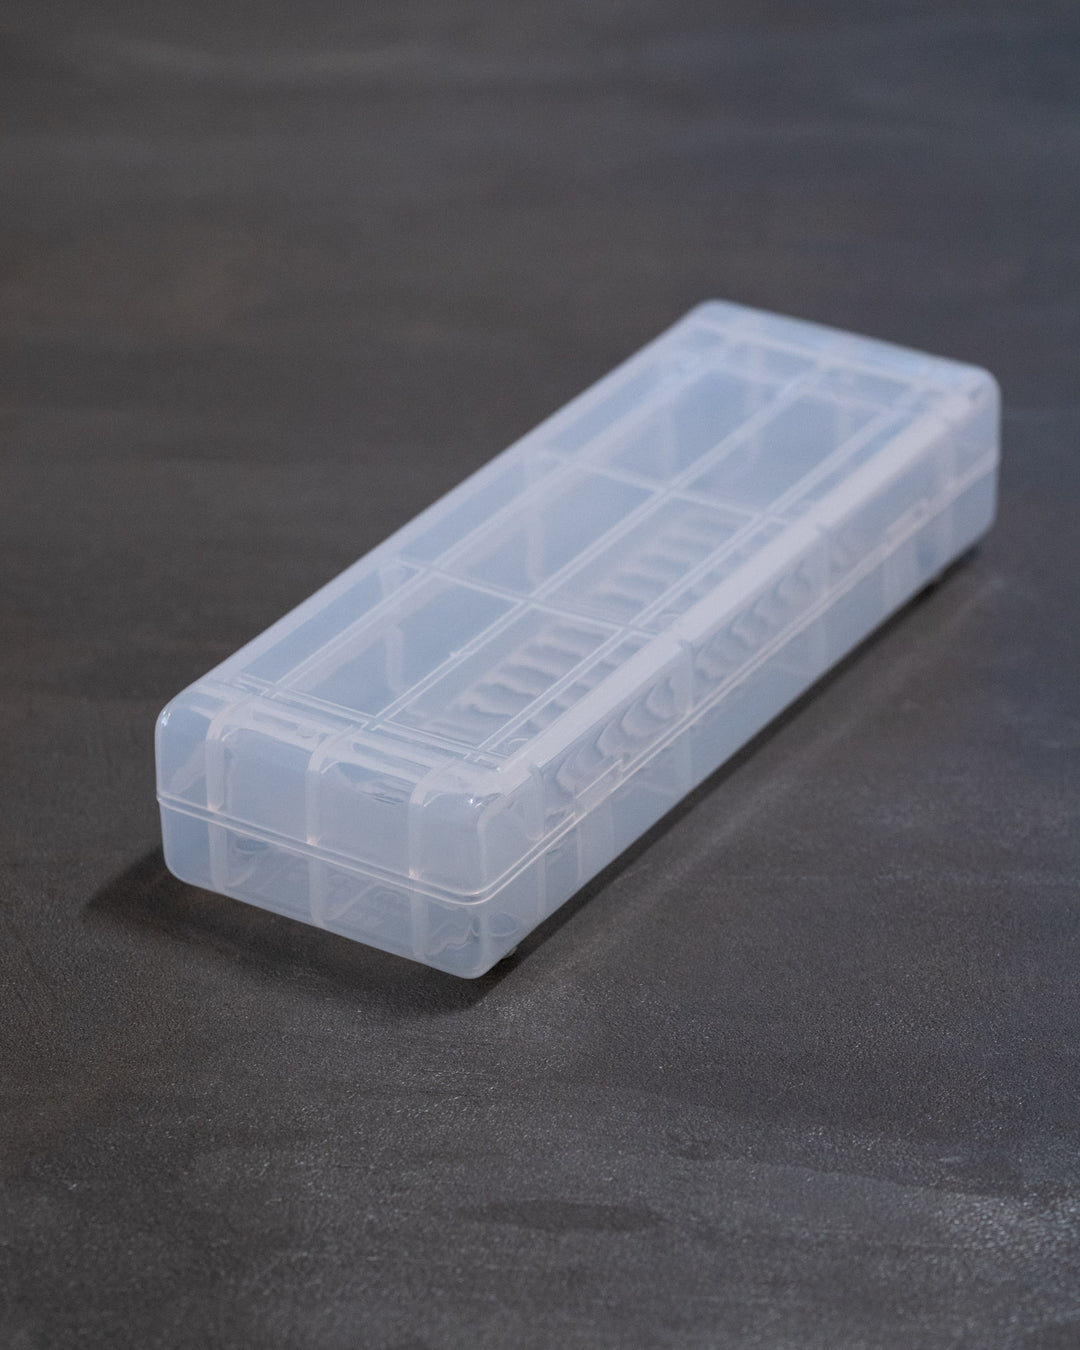 Naniwa plastic case and holder for whetstone